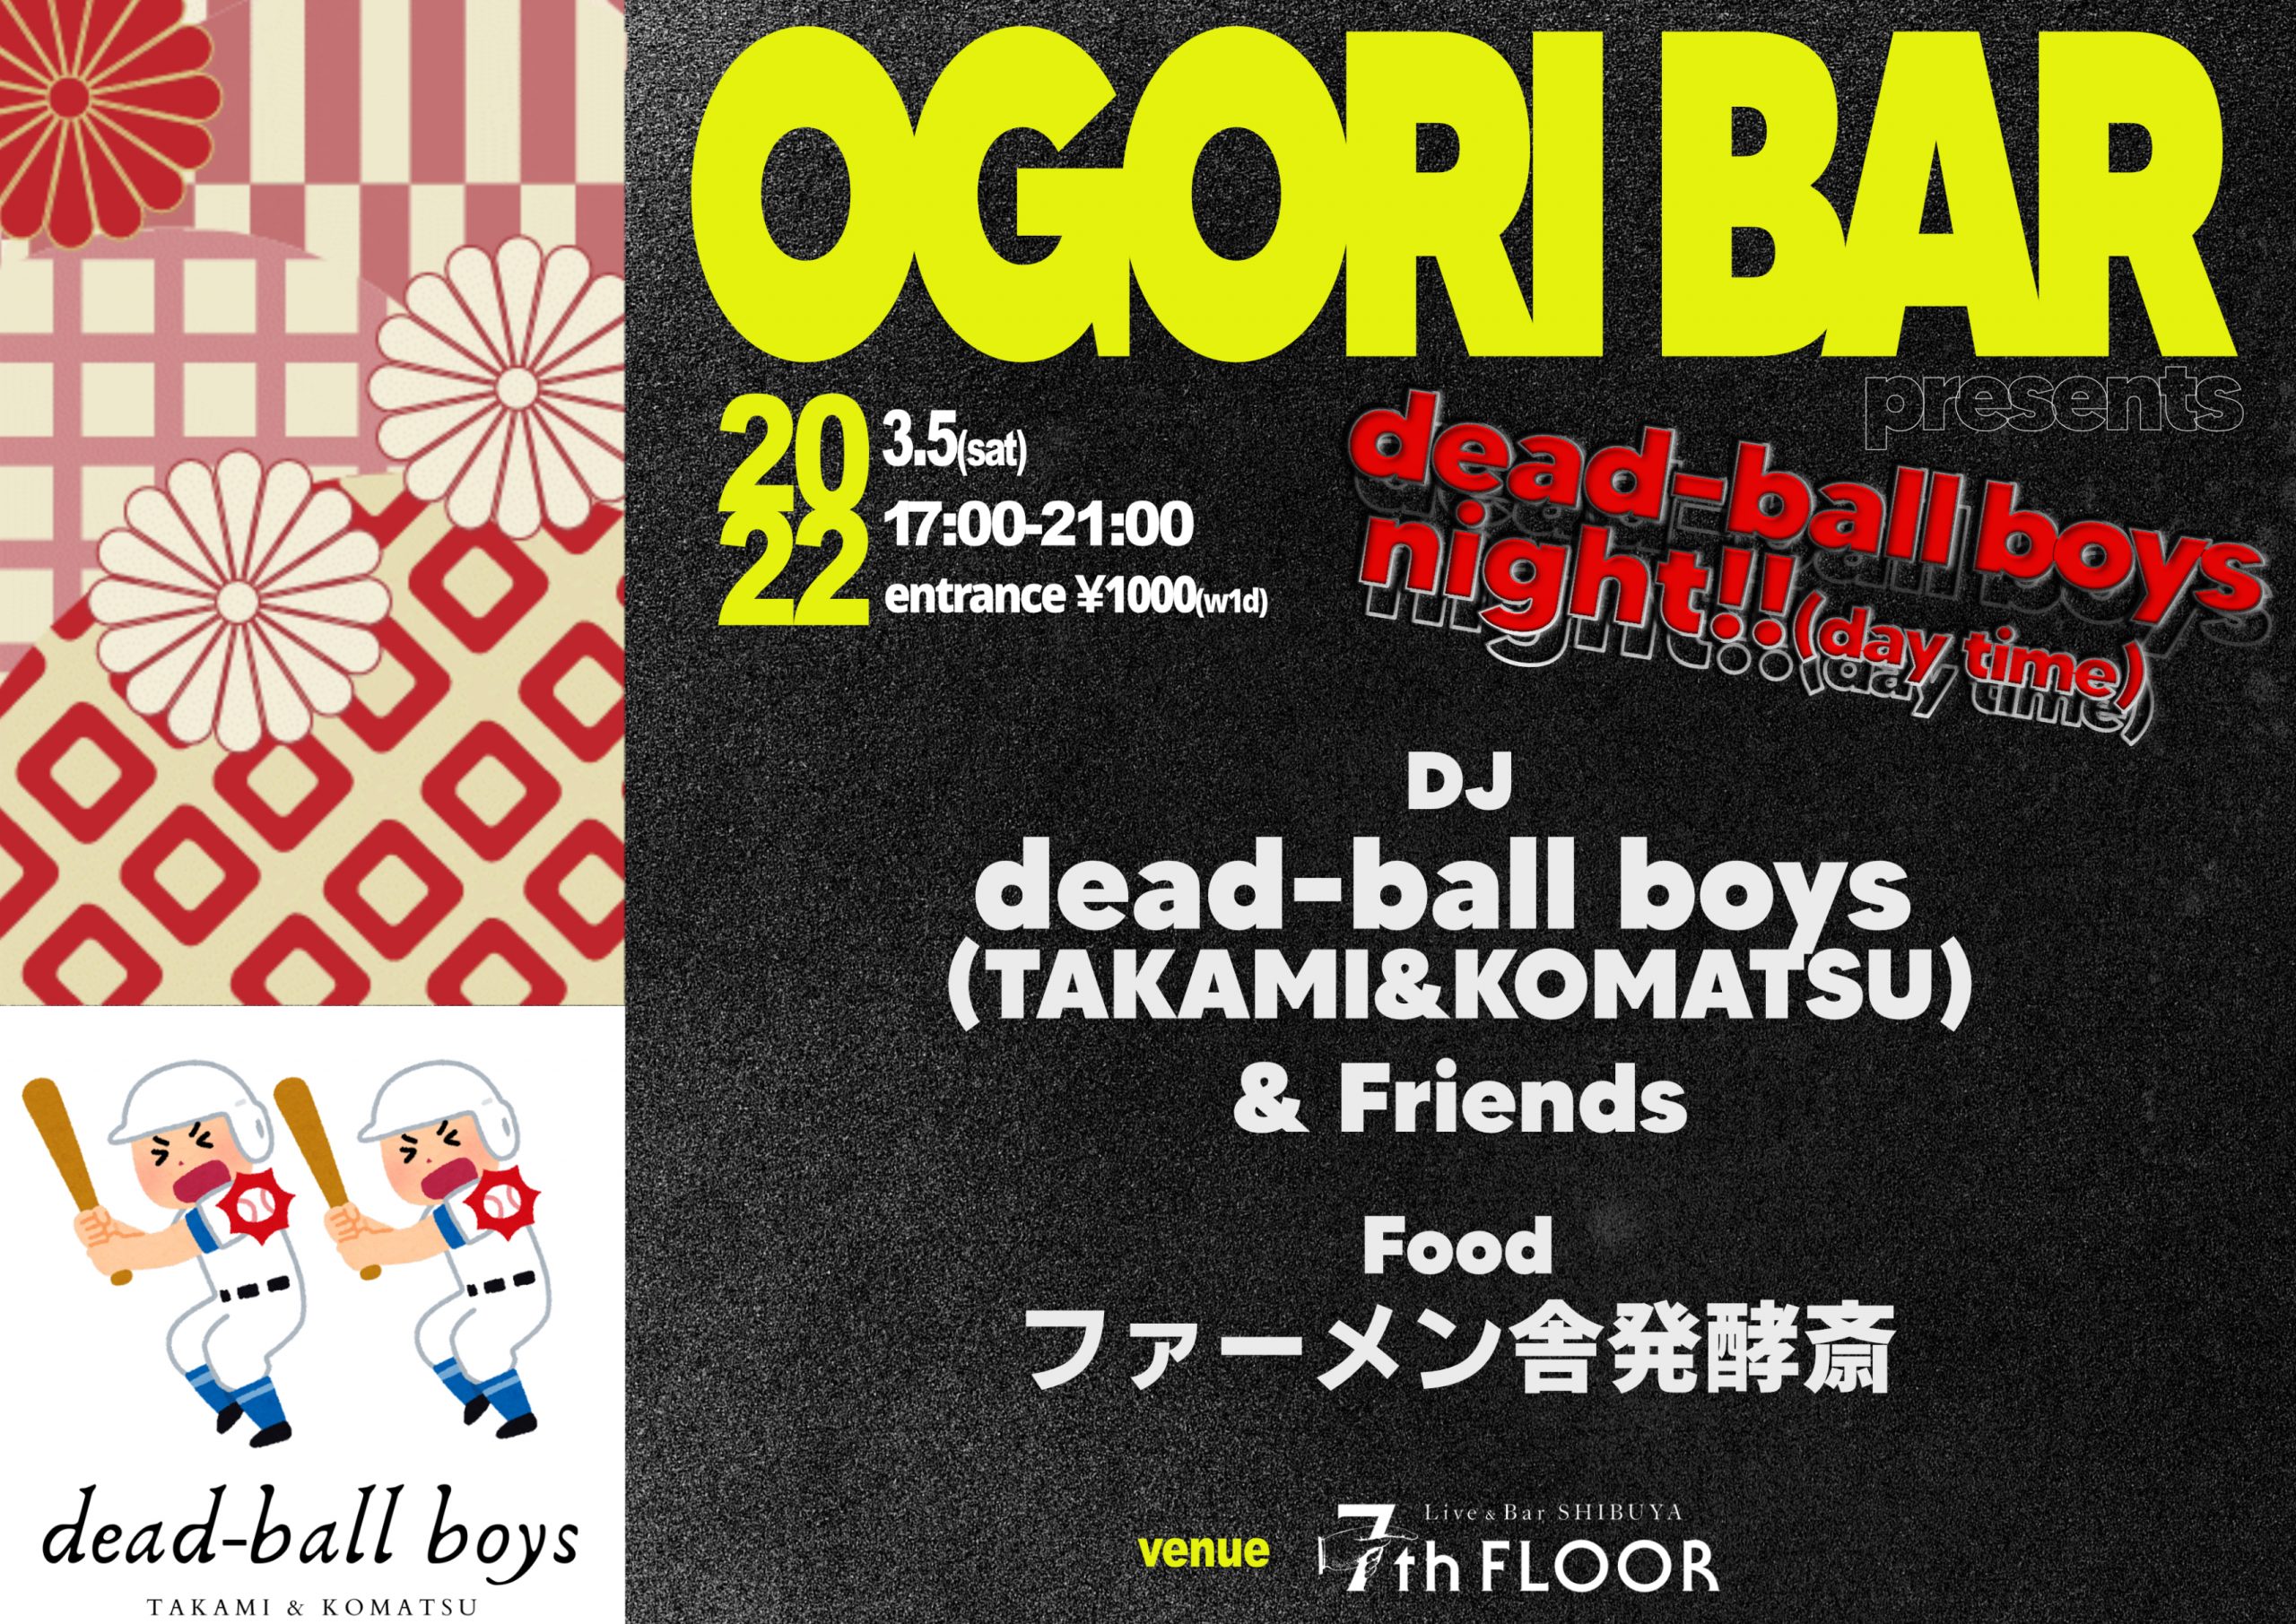 ogori bar presents dead-ball boys night!!（daytime）